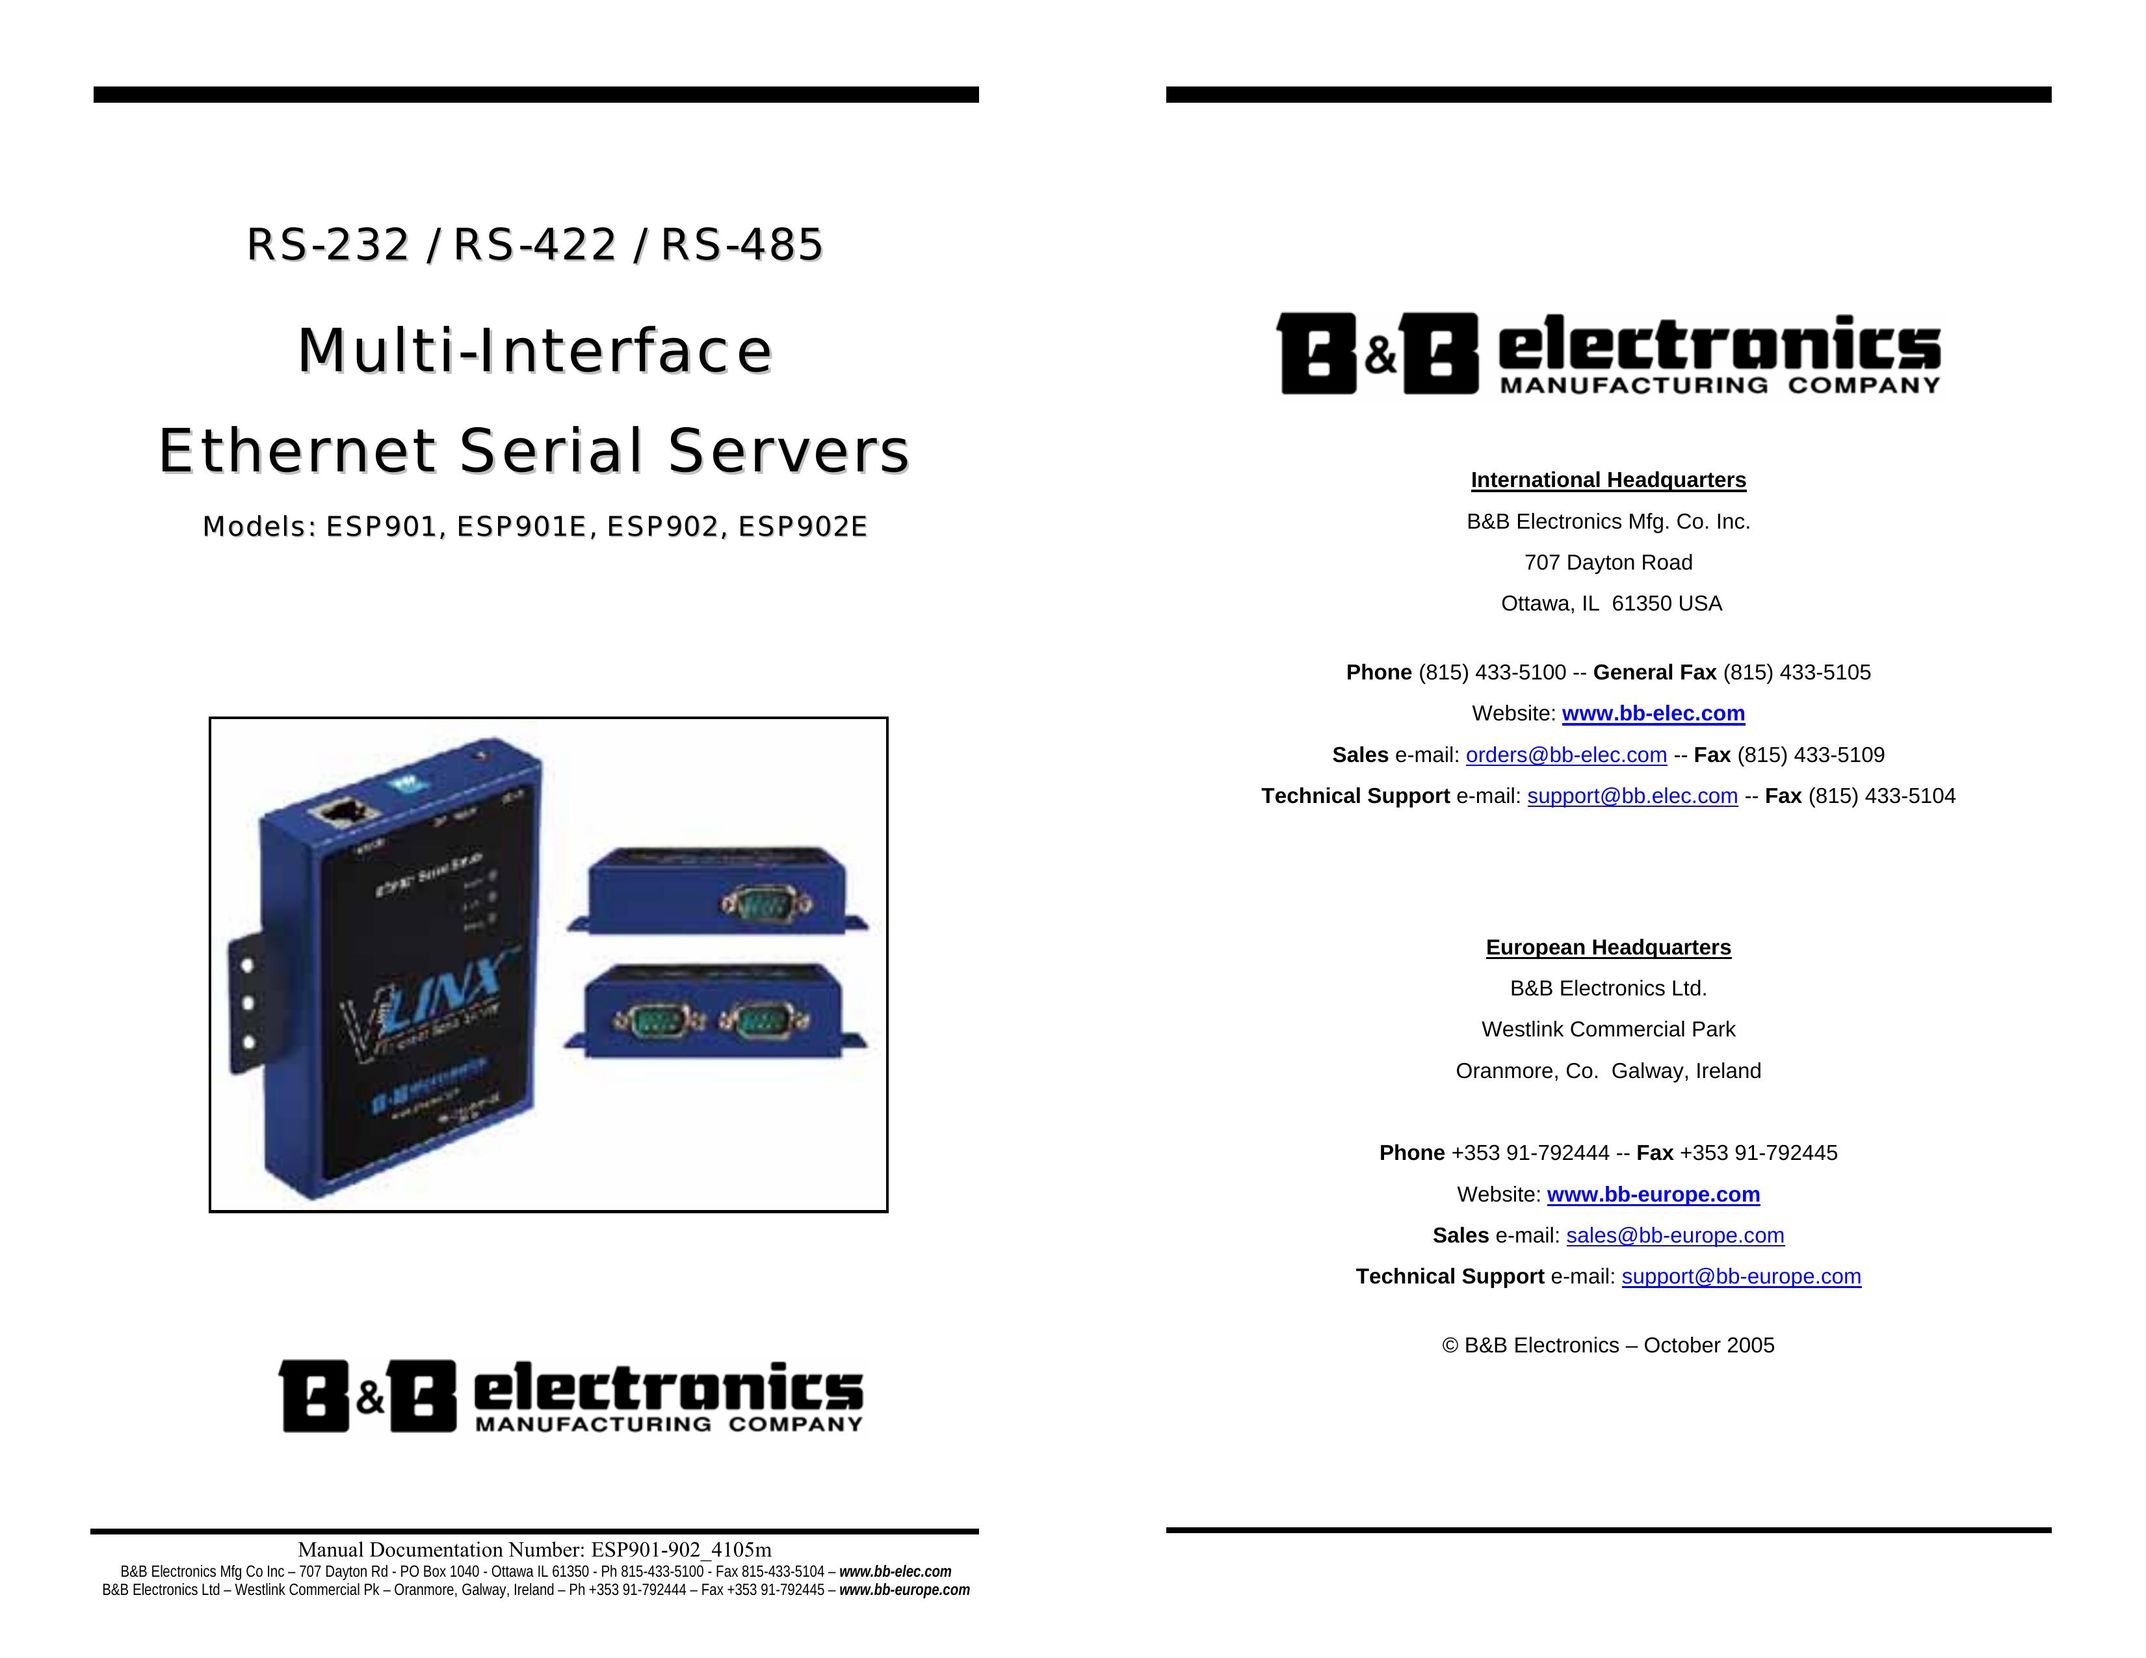 B&B Electronics Multi-Interface Ethernet Serial Servers Server User Manual